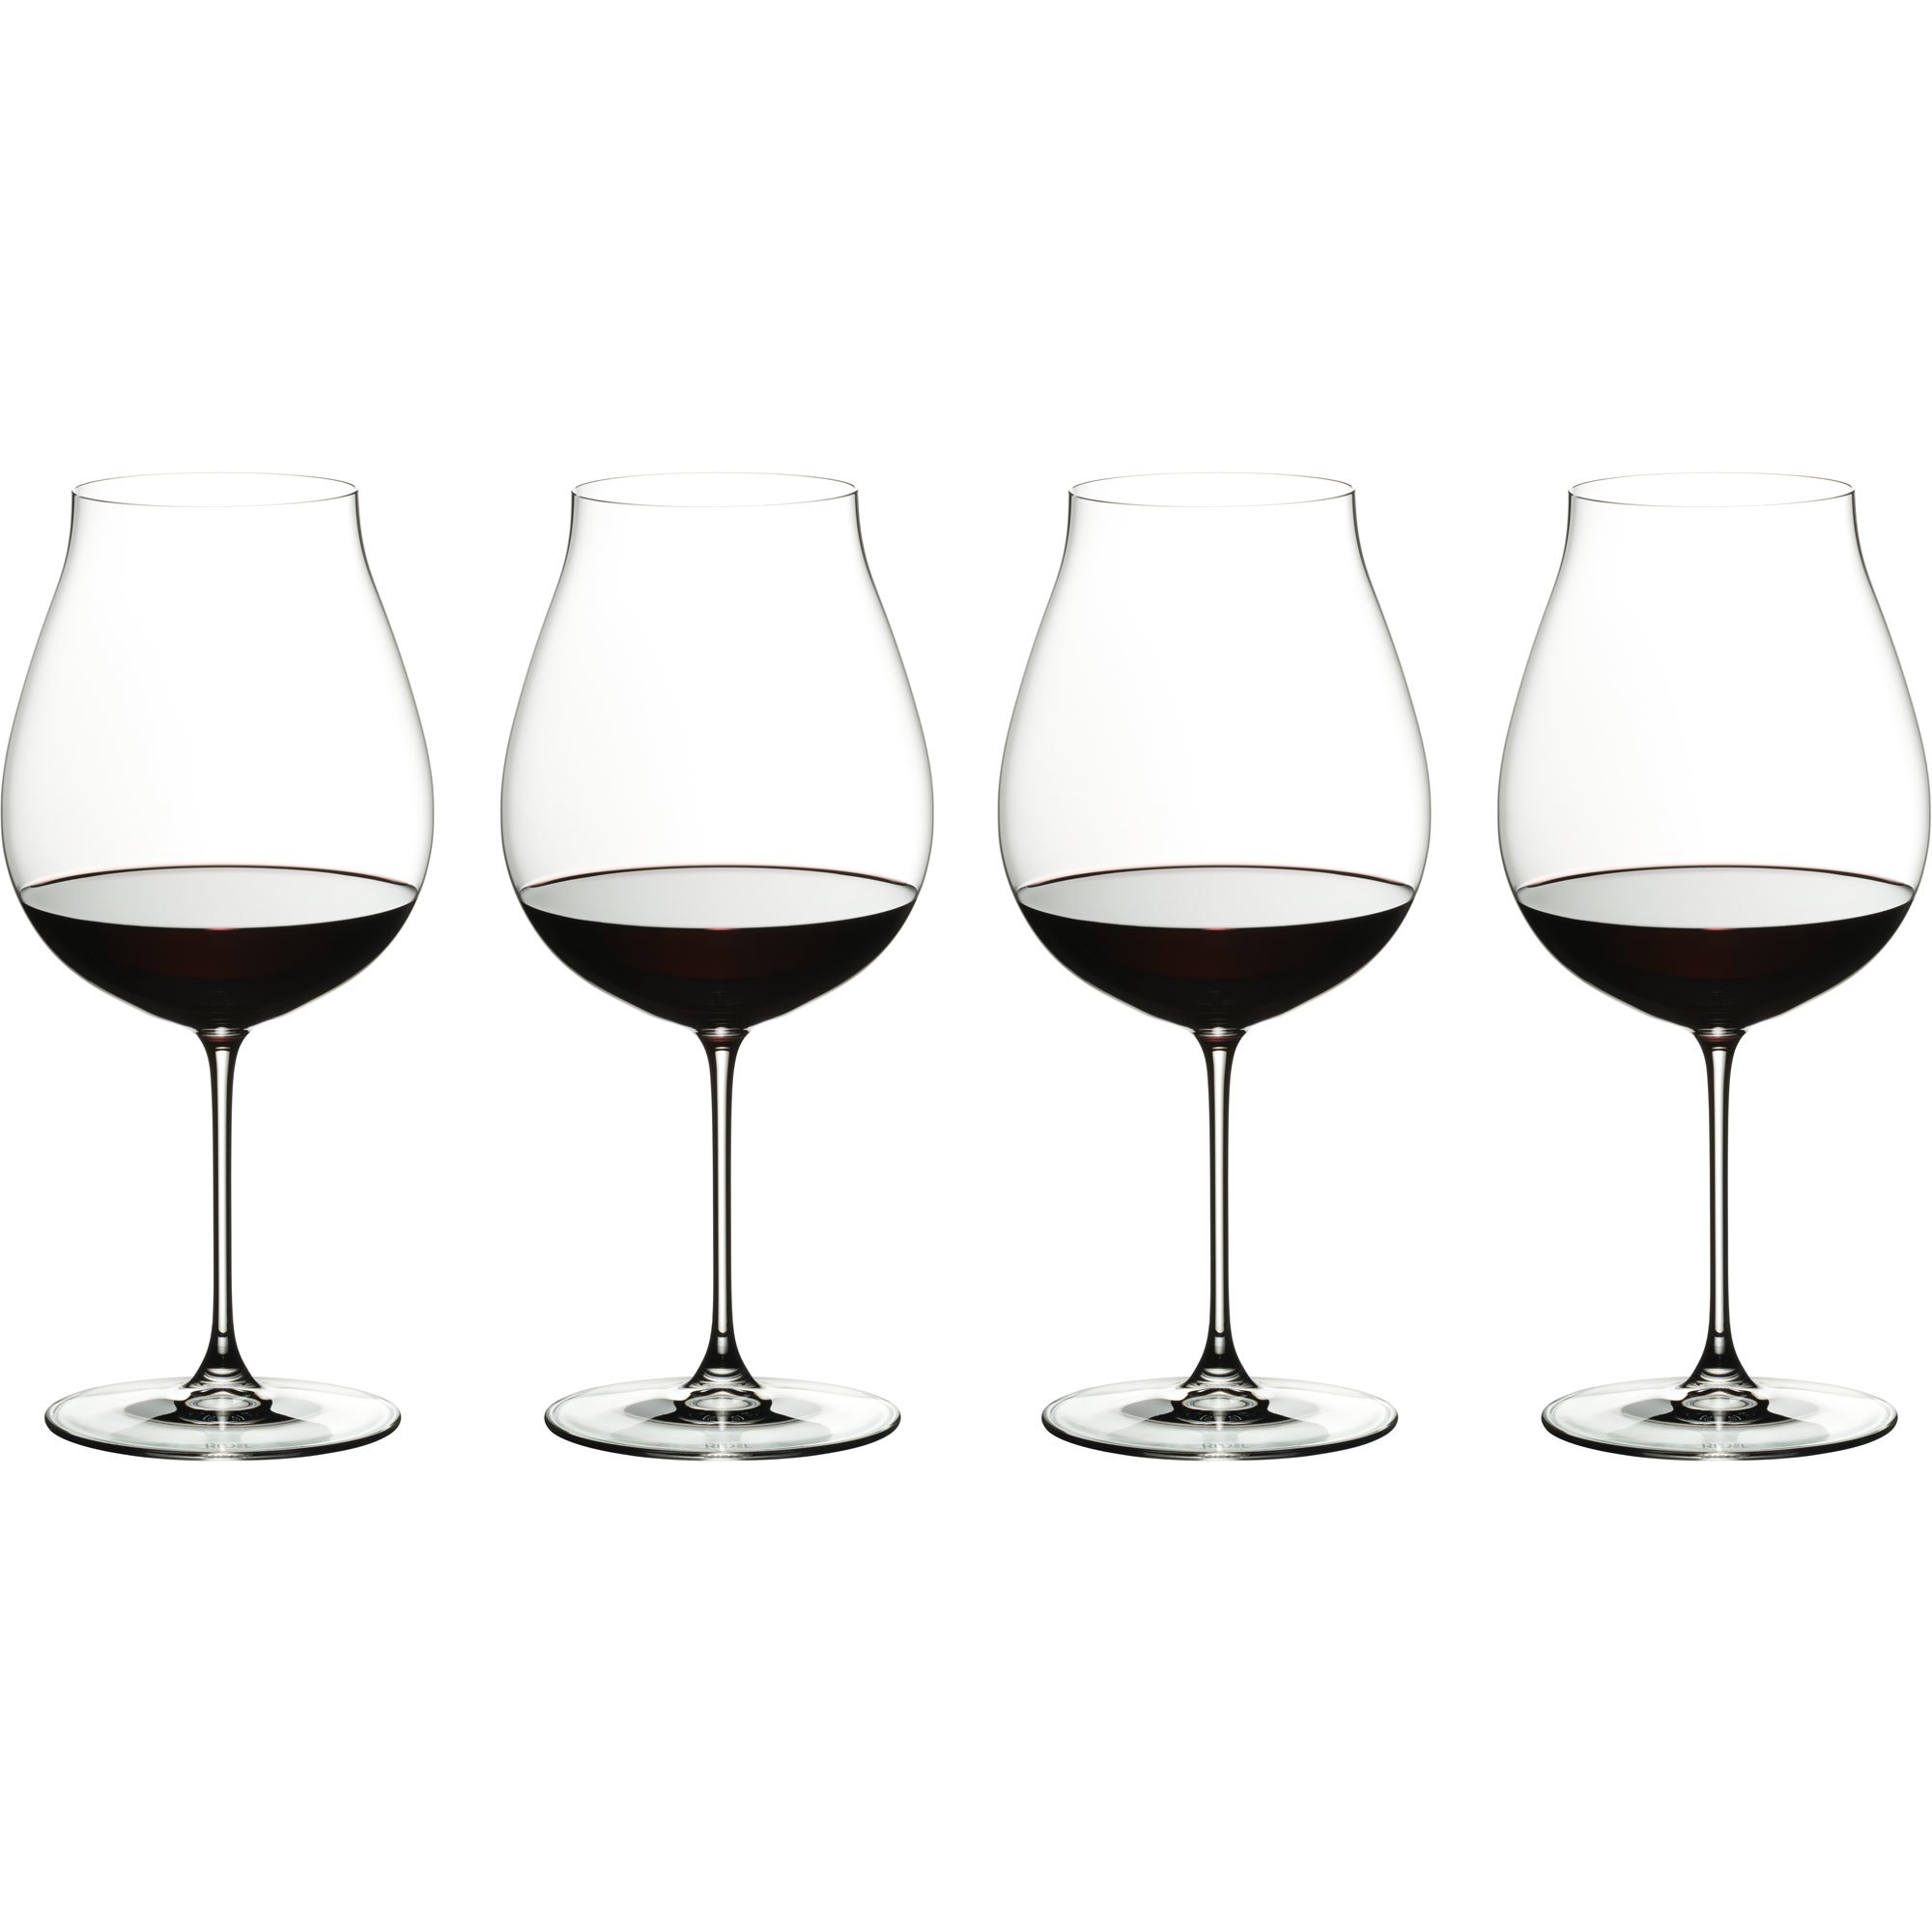 Riedel Veritas N. World Pinot Noir vinglas 4 stk. 265-års jubilæum